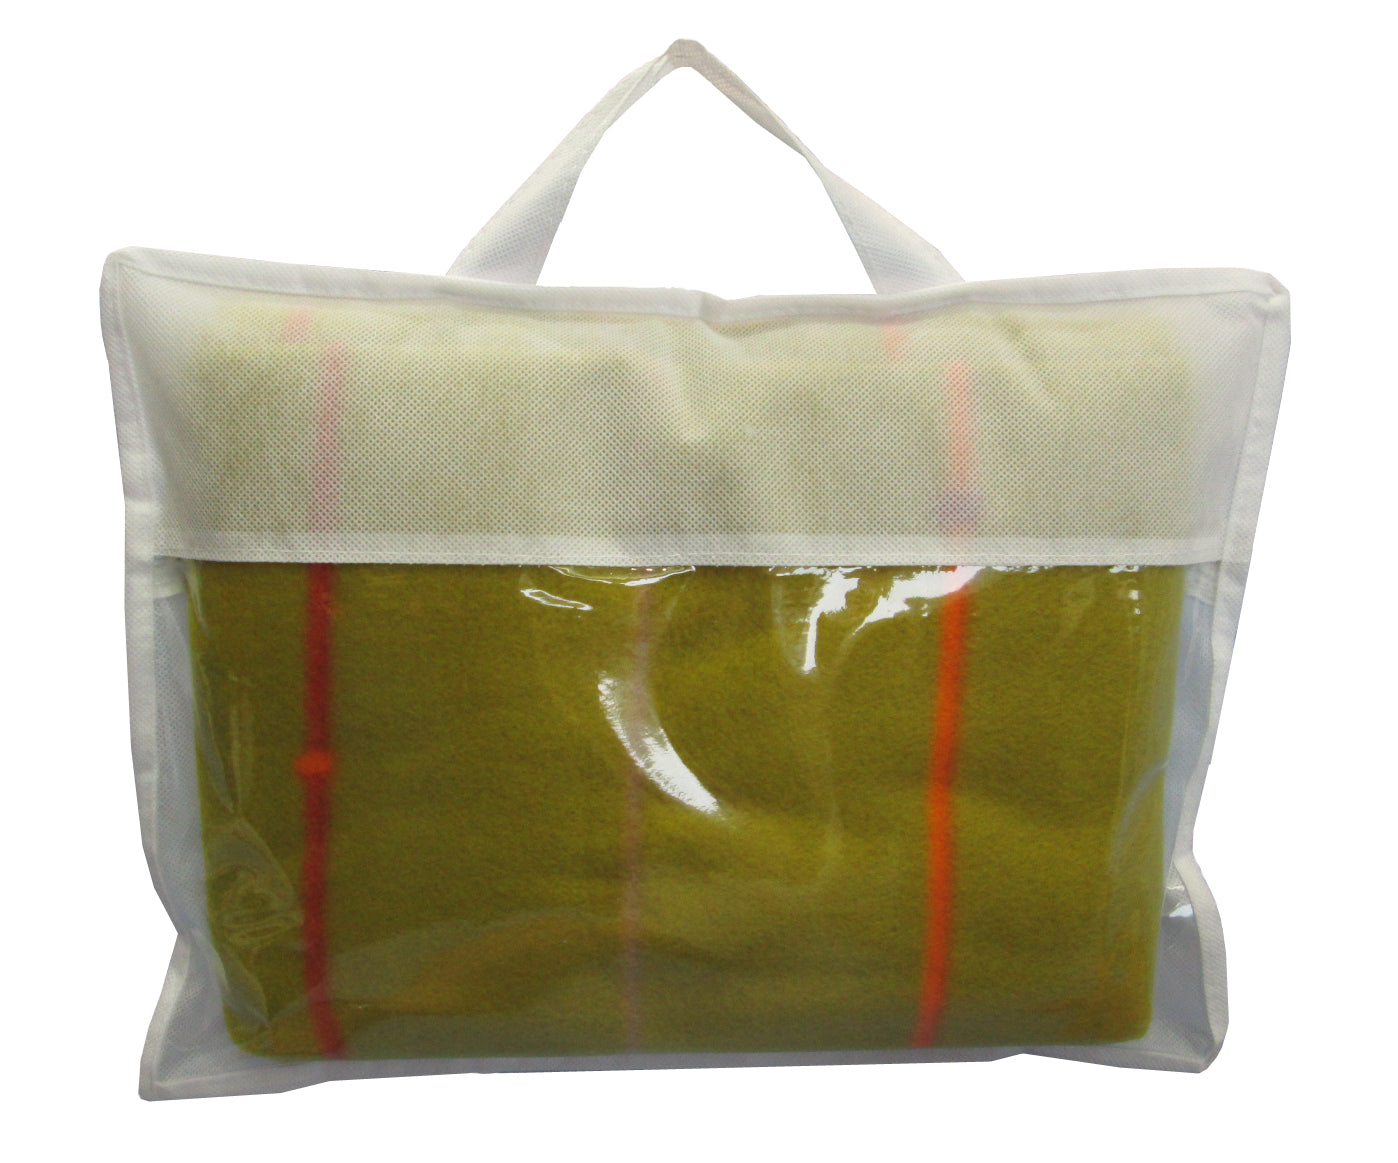 JLSB-0035 Sewn Bag